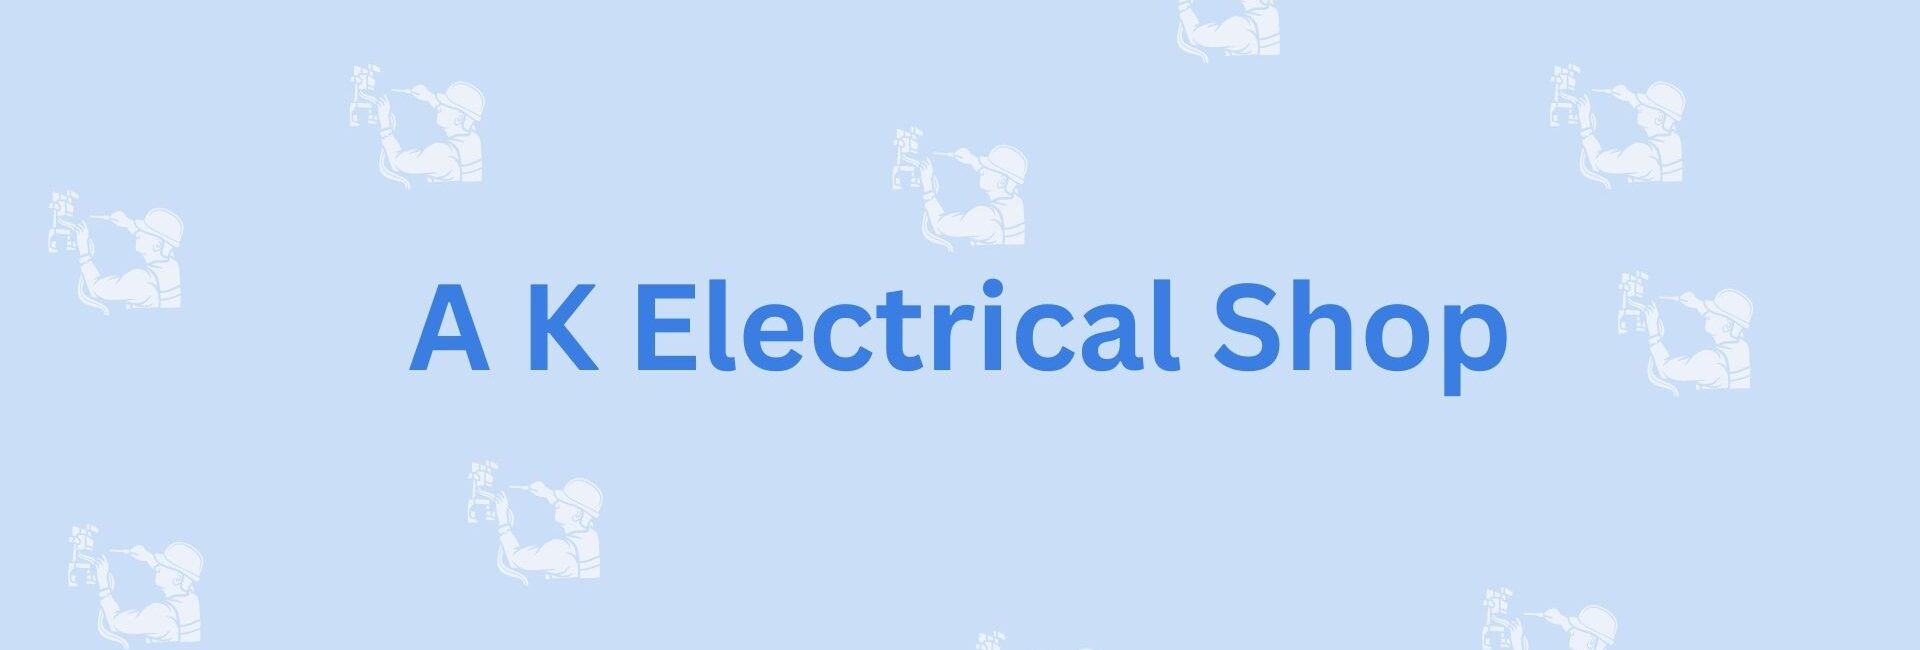 A K Electrical Shop- Electrical Emergencies in Noida